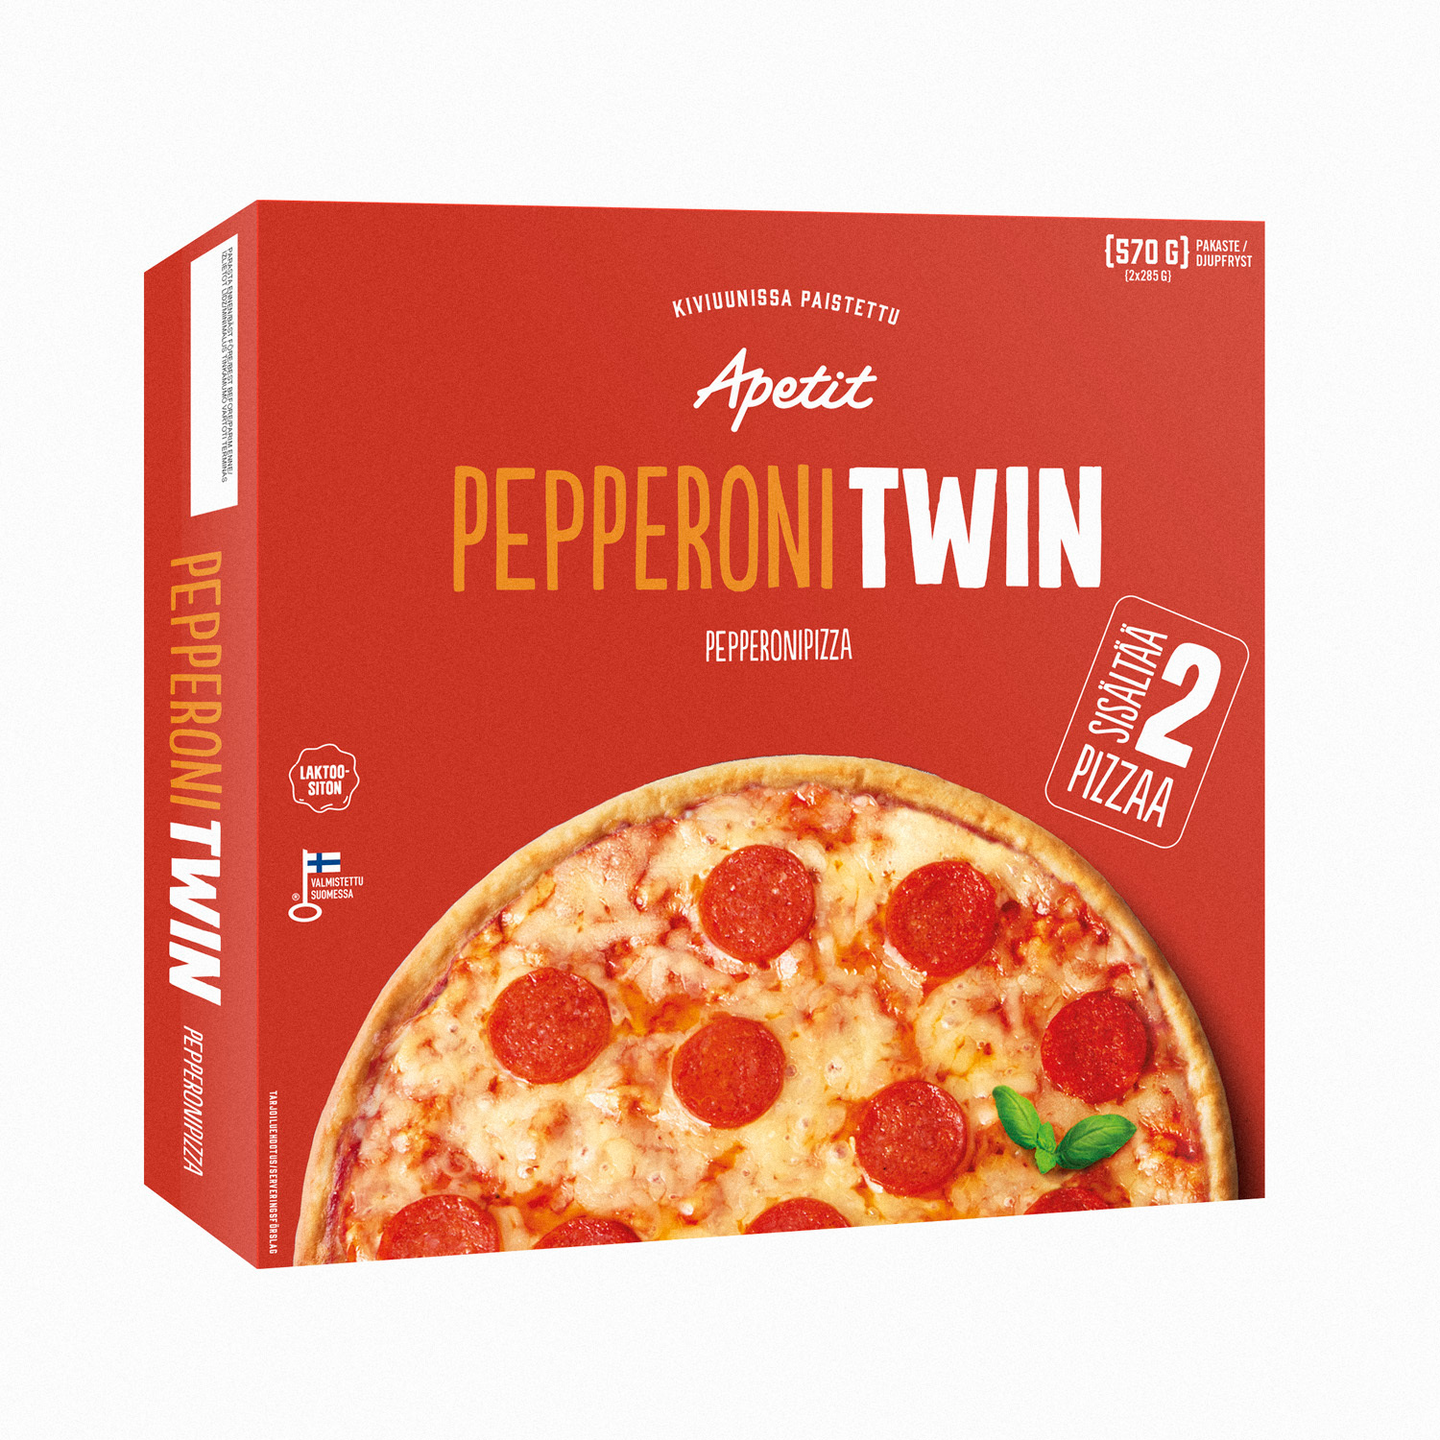 Apetit pepperoni twin pizza 2x285g pakaste